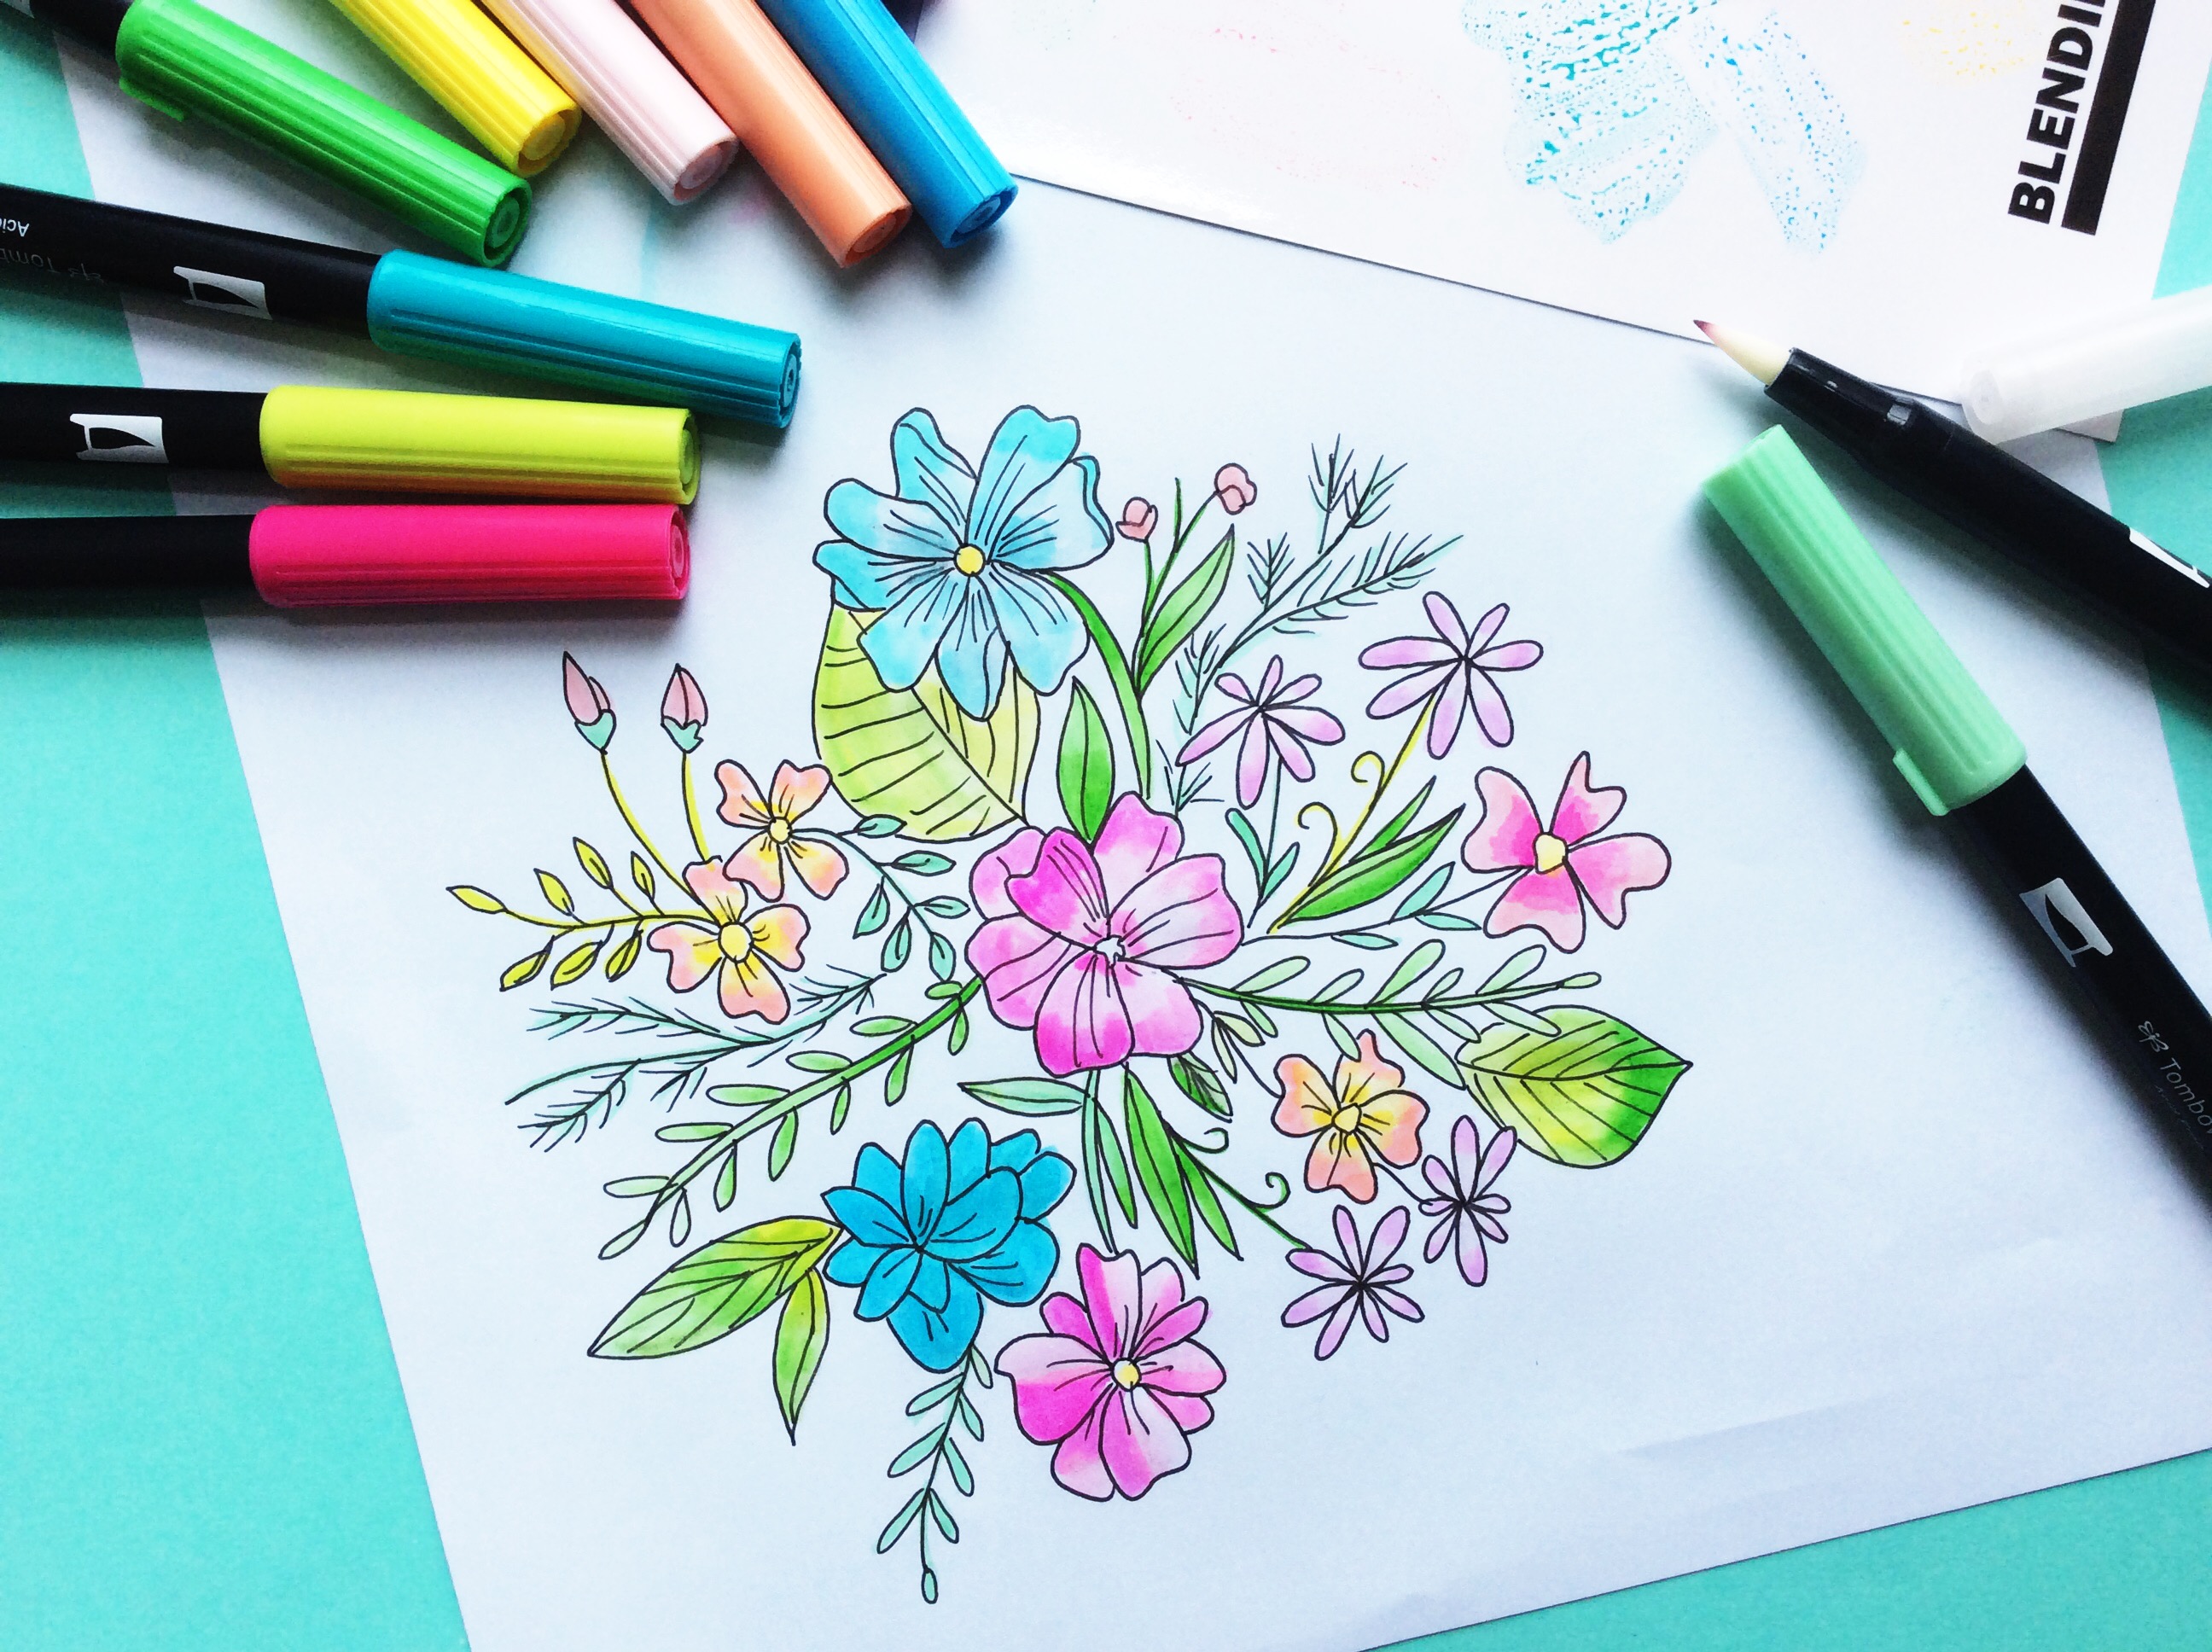 Tombow MONO Drawing Pens & Botanical Line Drawing: A Review - Amanda  Kammarada